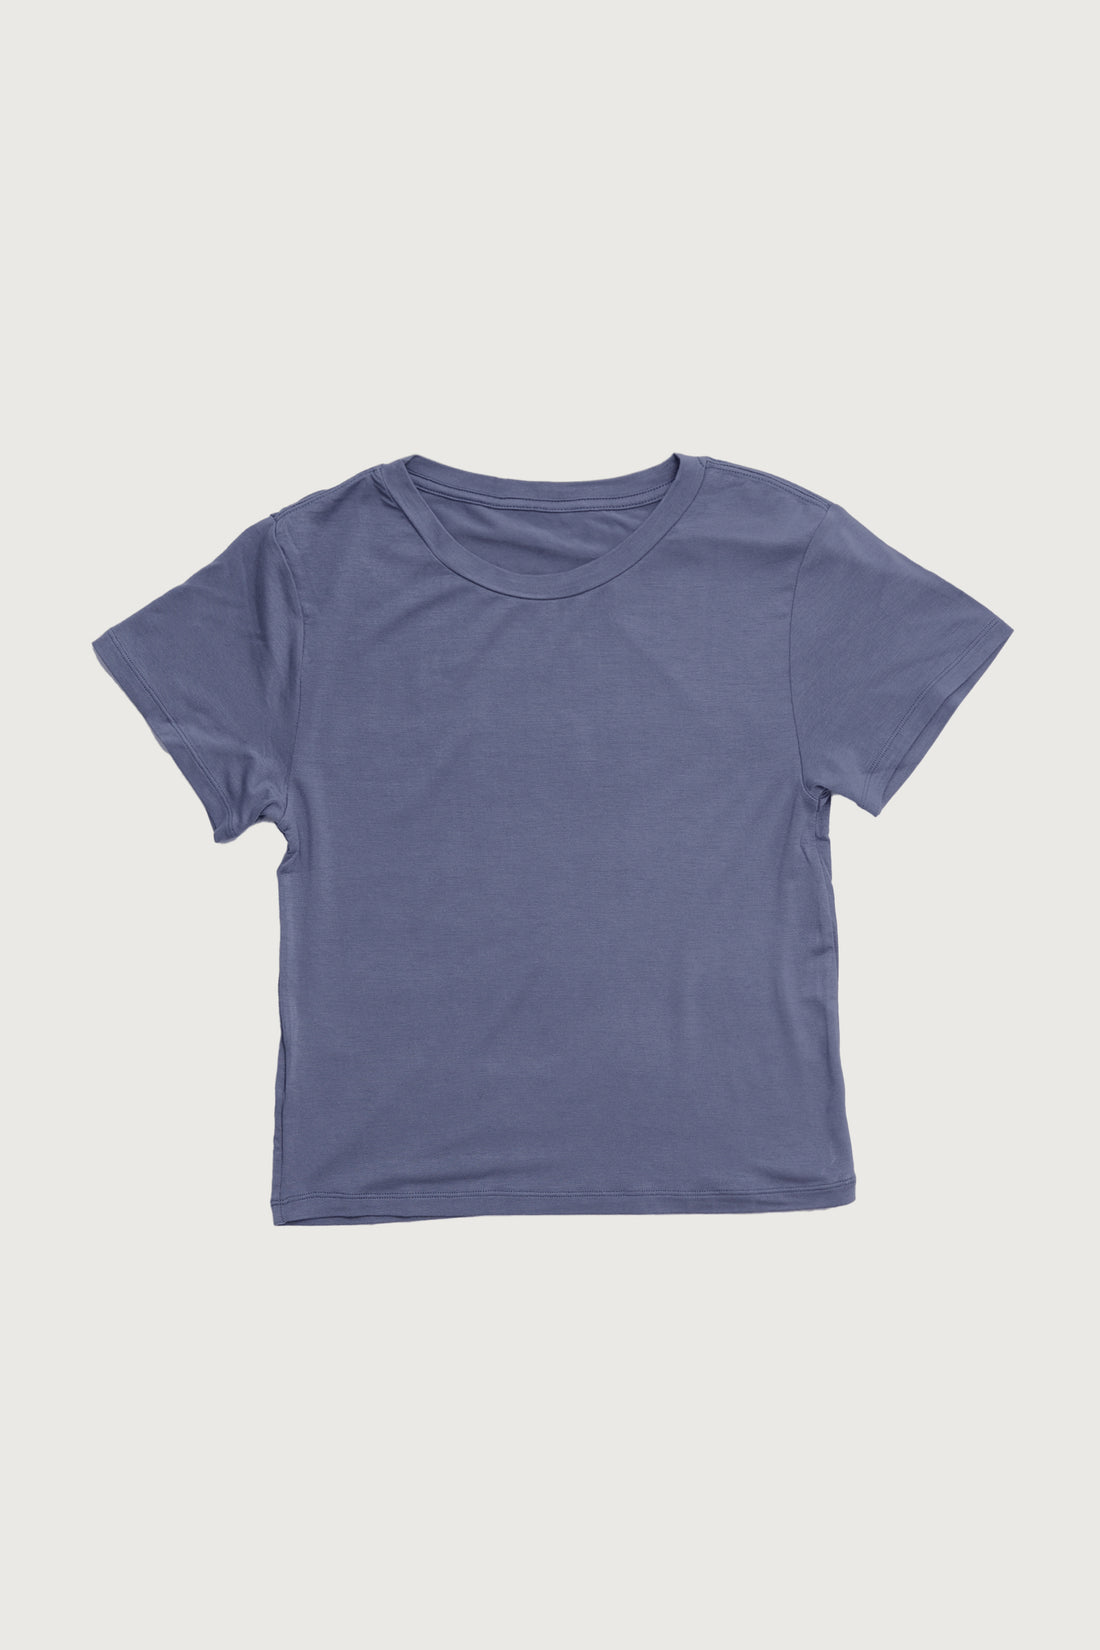 Core T-Shirt + Space Blue - Little Puffy